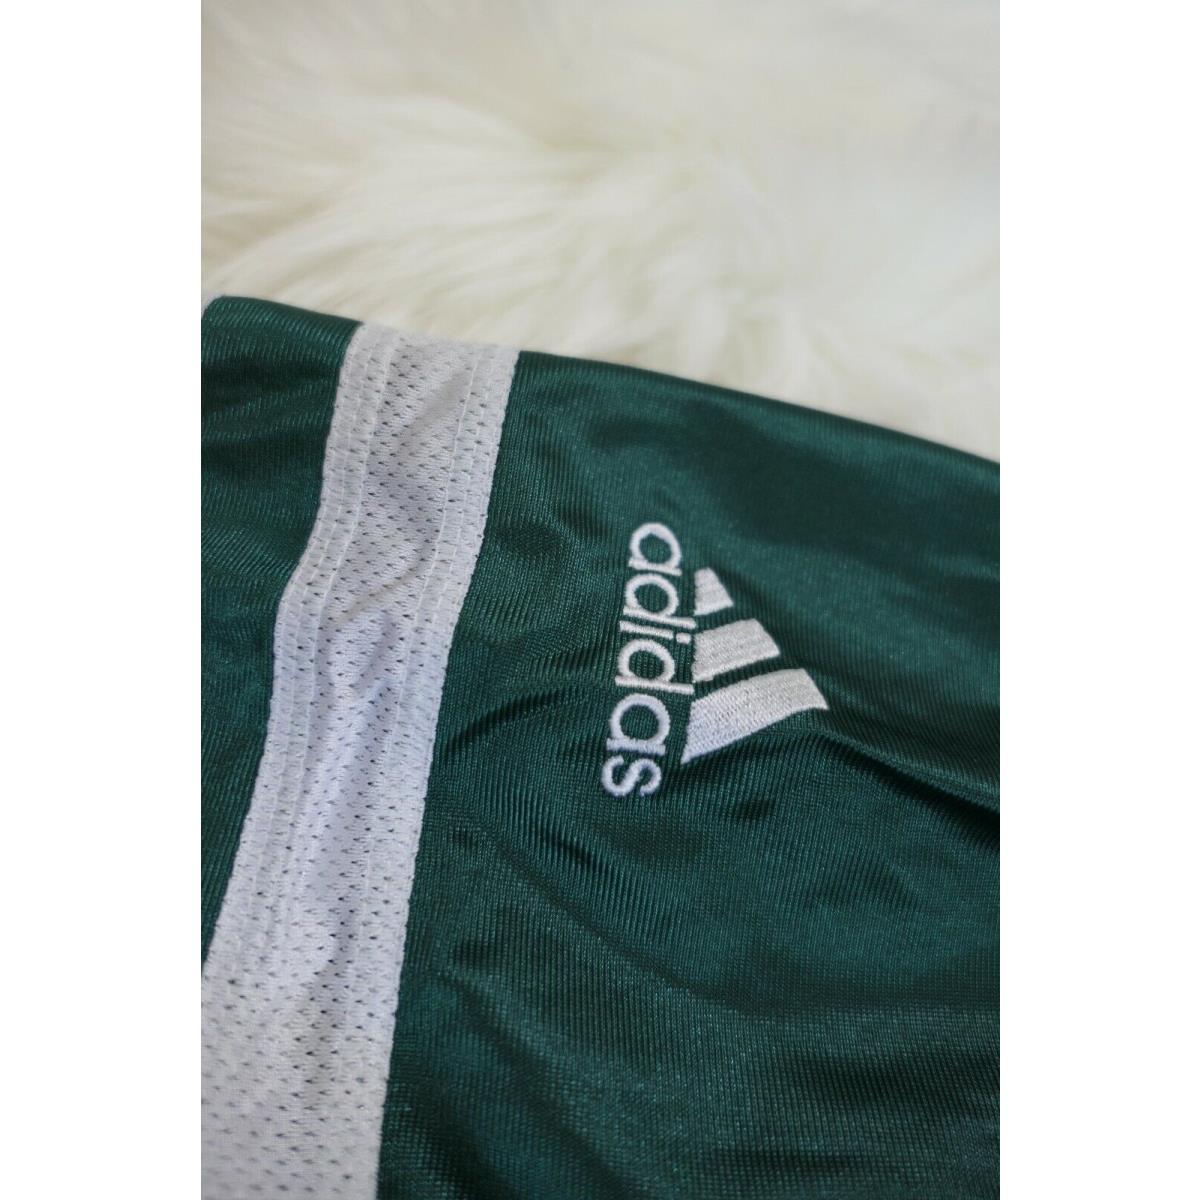 90s Adidas Polyester Green White Azteca Men`s Small Soccer Shorts